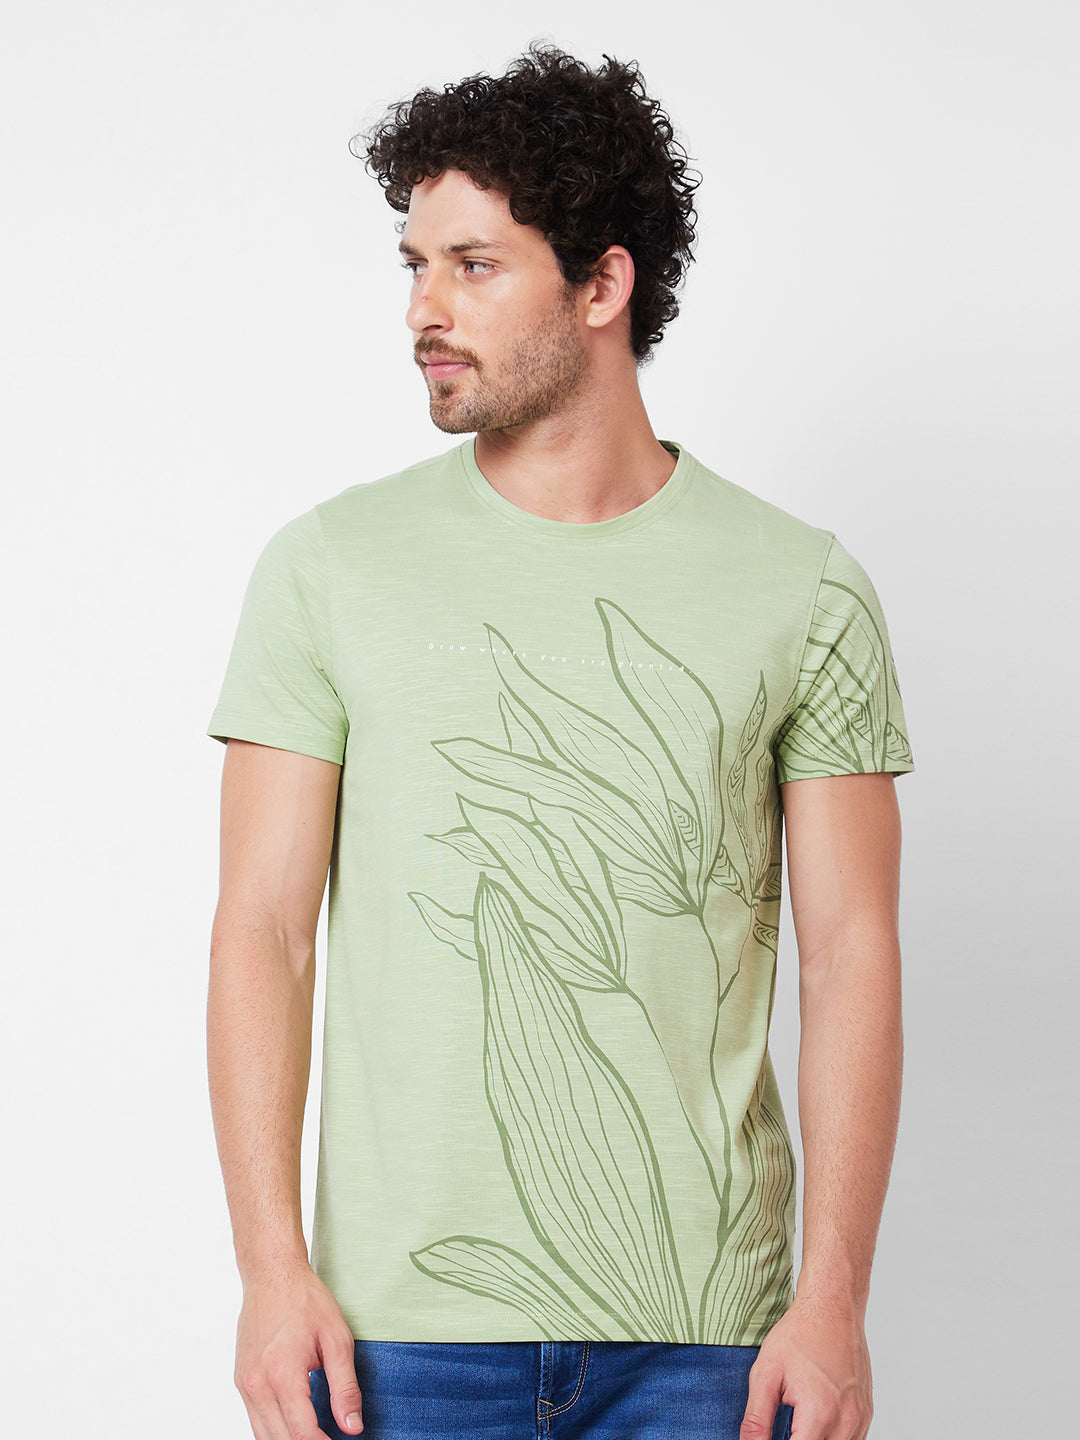 T Shirt For Men - Buy Men T Shirts Online From Spykar